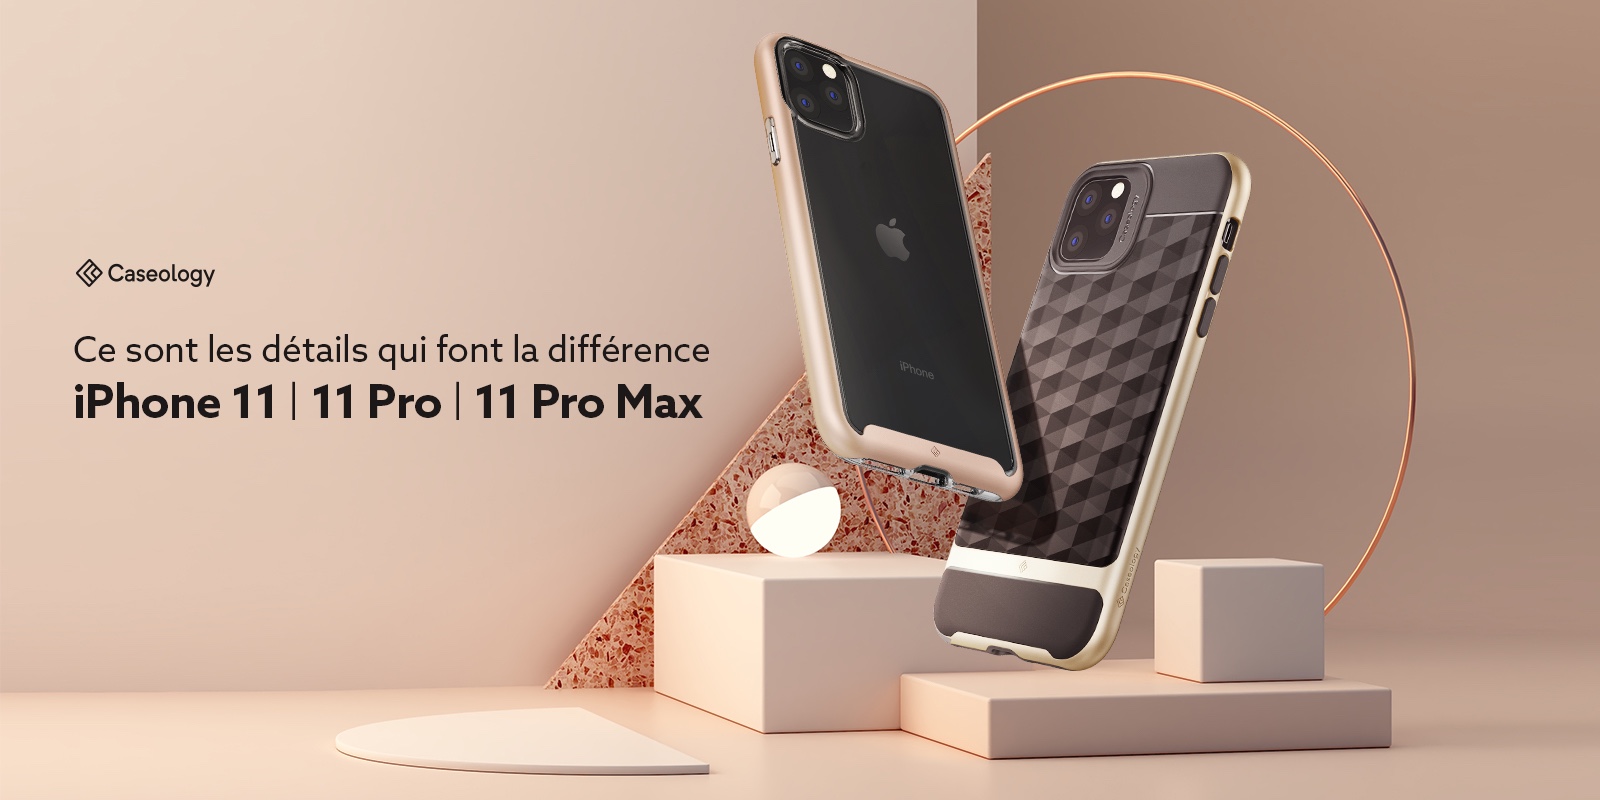 Iphone11 Pro Max ads